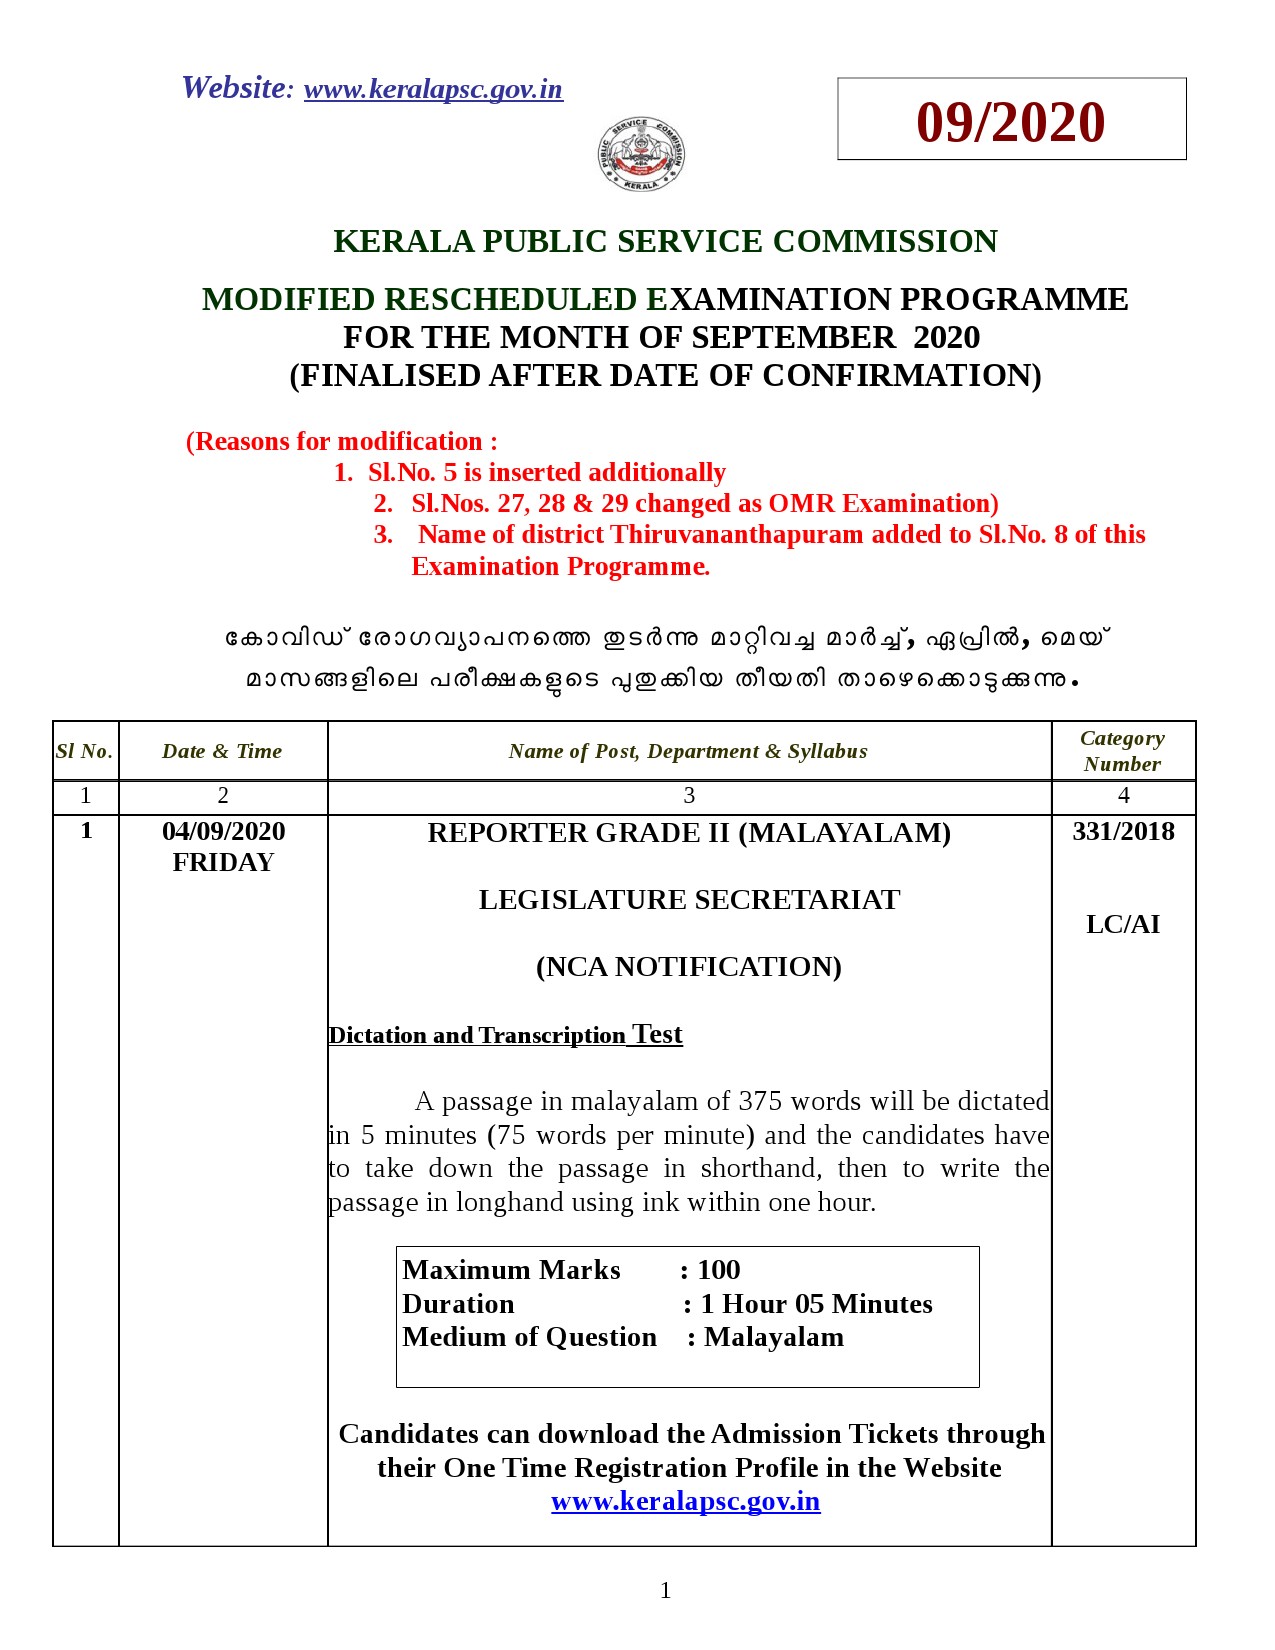 Kerala PSC Exam Calendar September 2020 - Notification Image 1